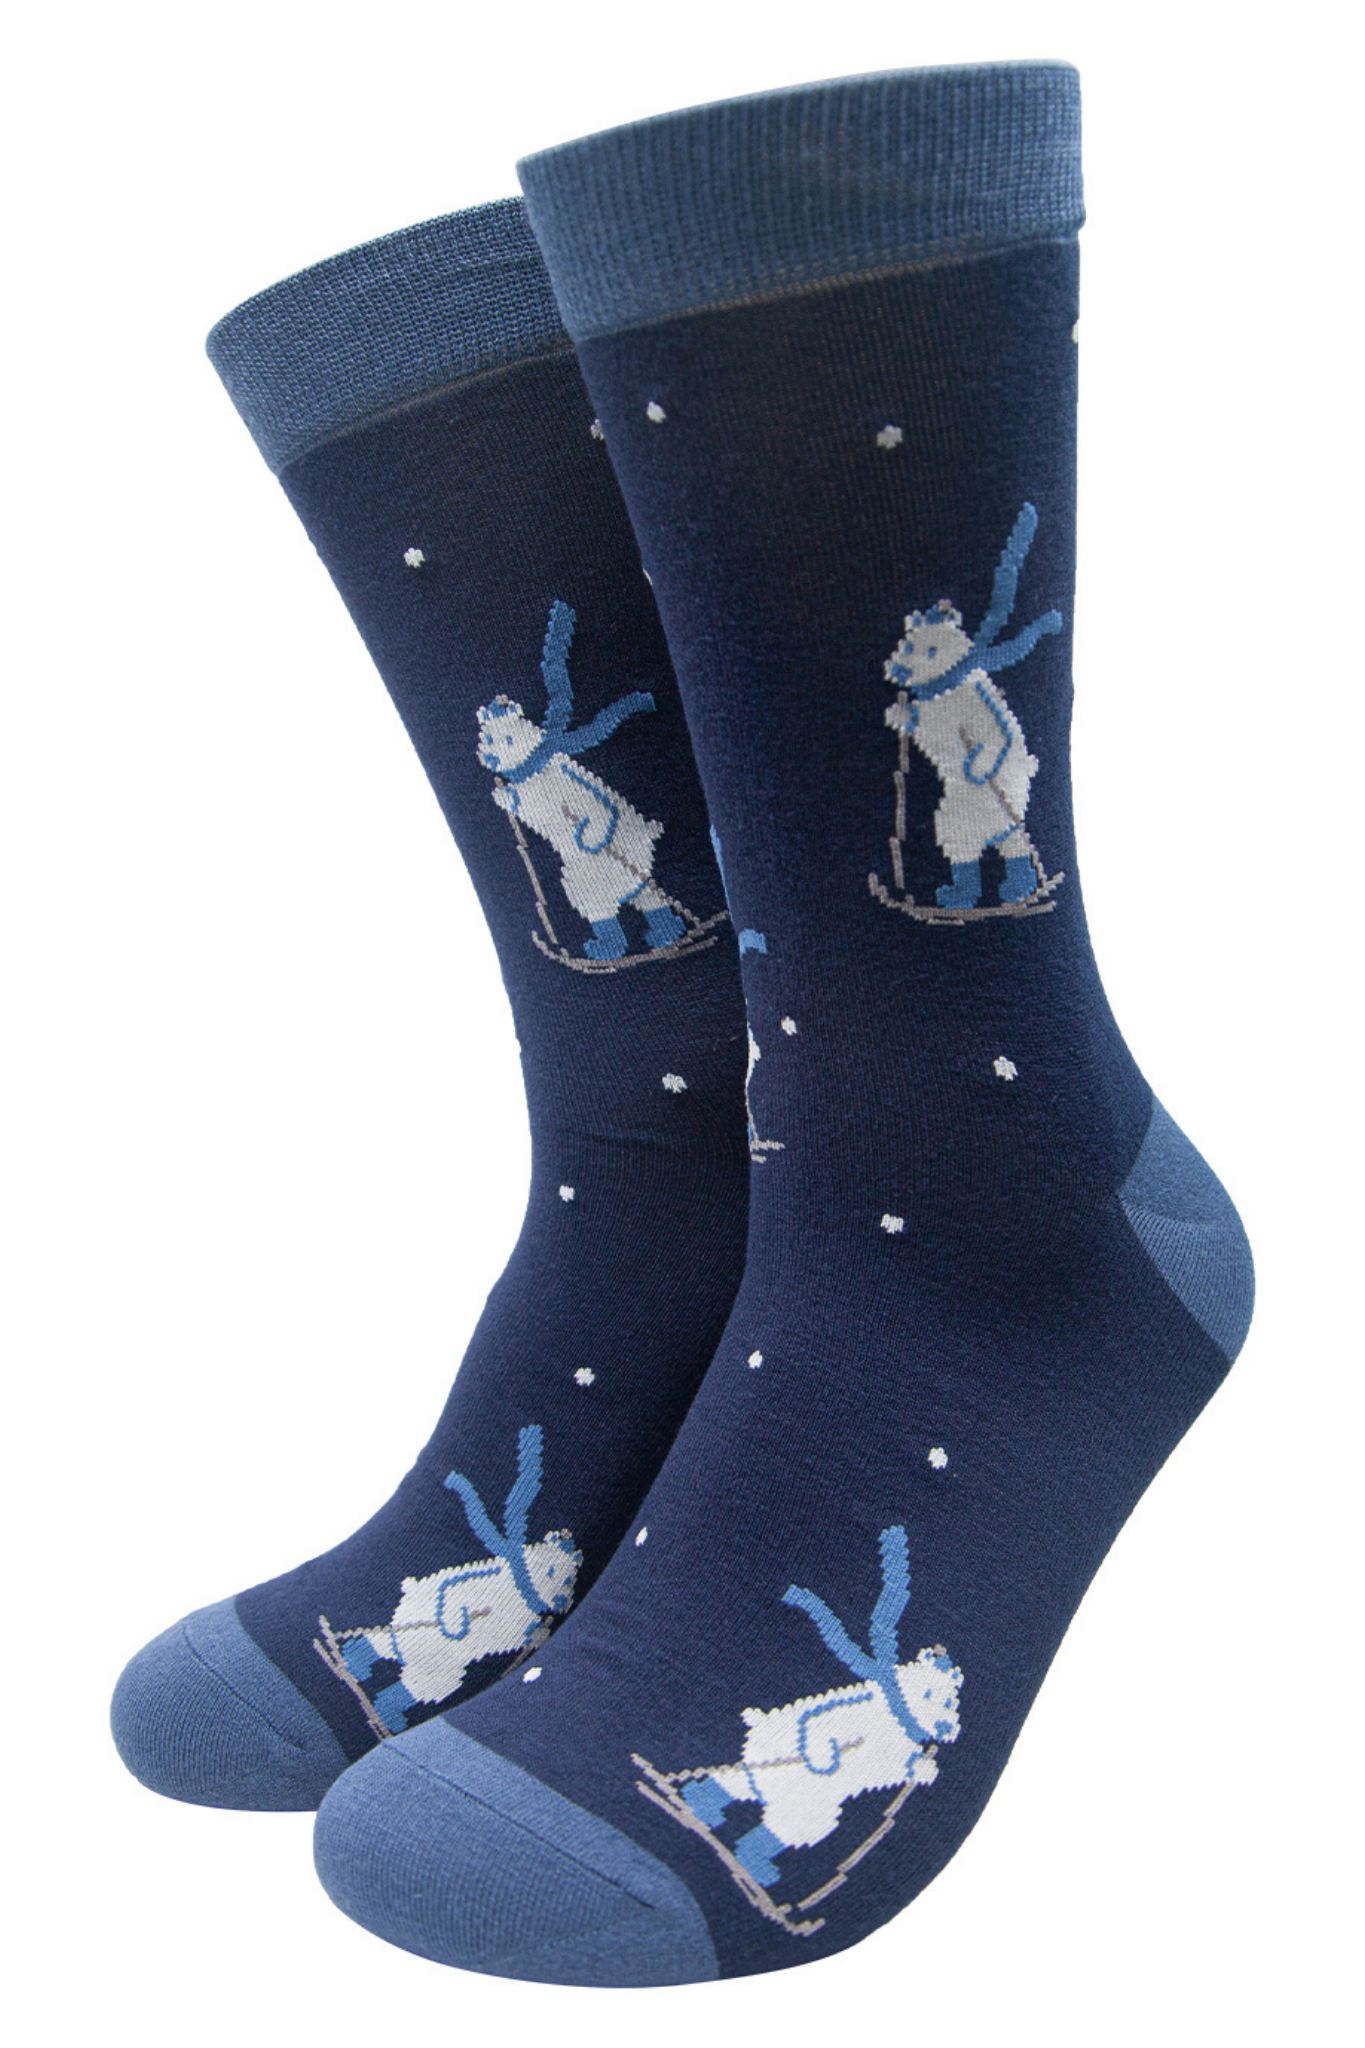 navy blue dress socks with cross country skiing polar bears